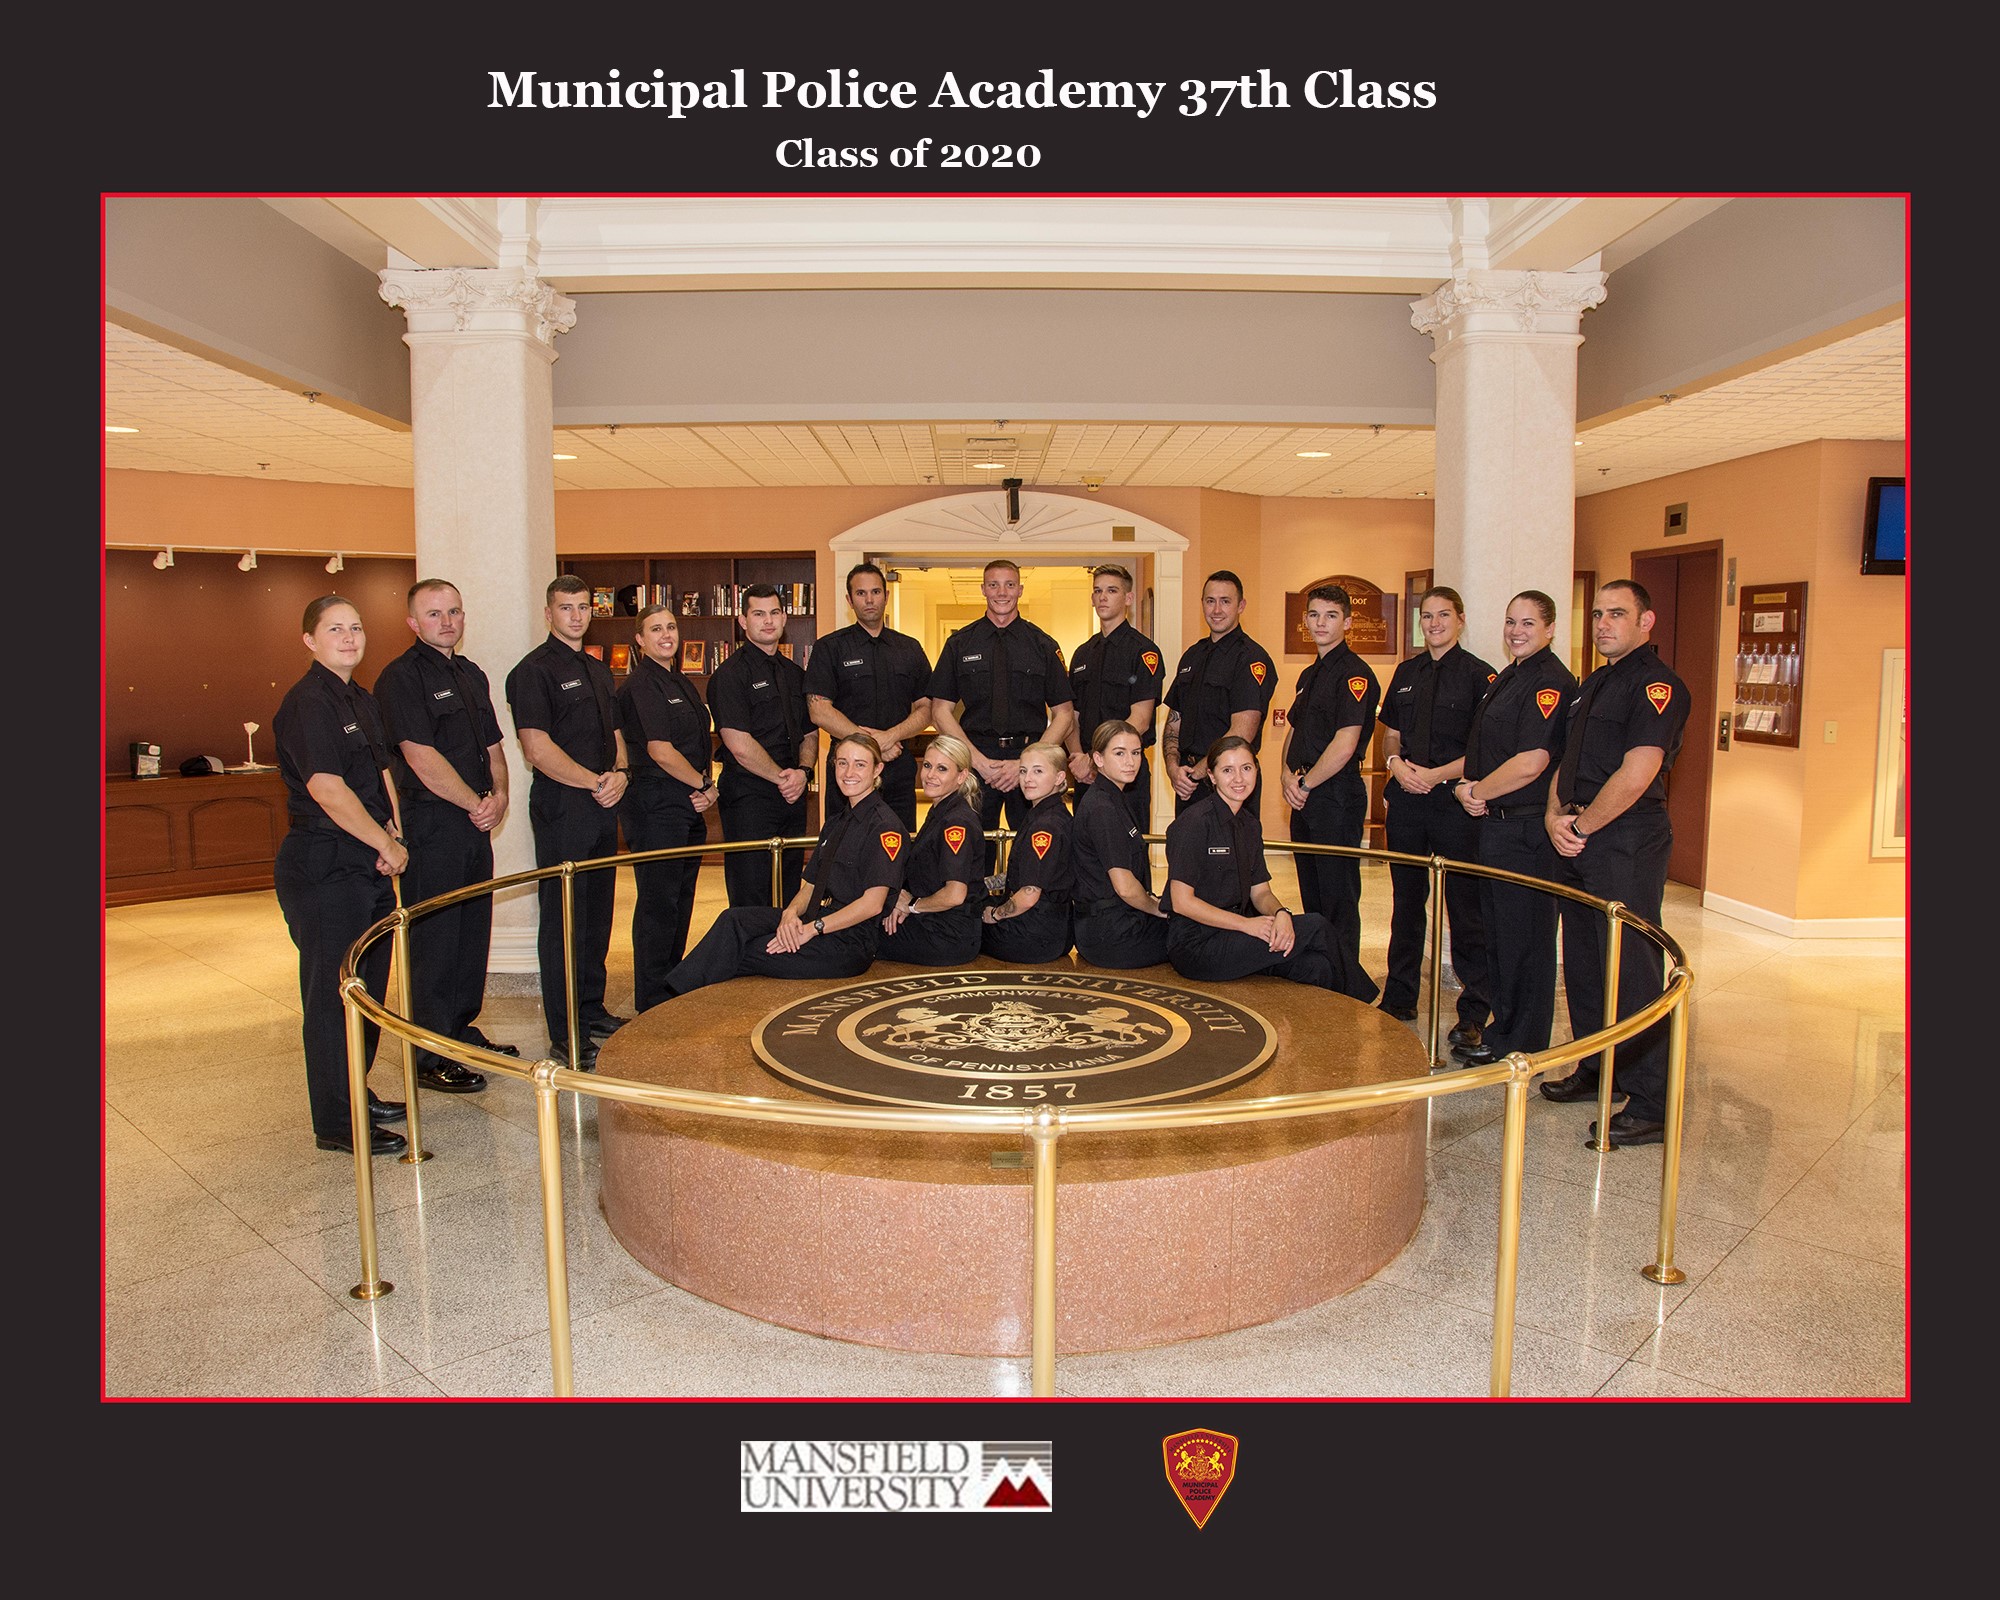 MU police academy class 2020 pic